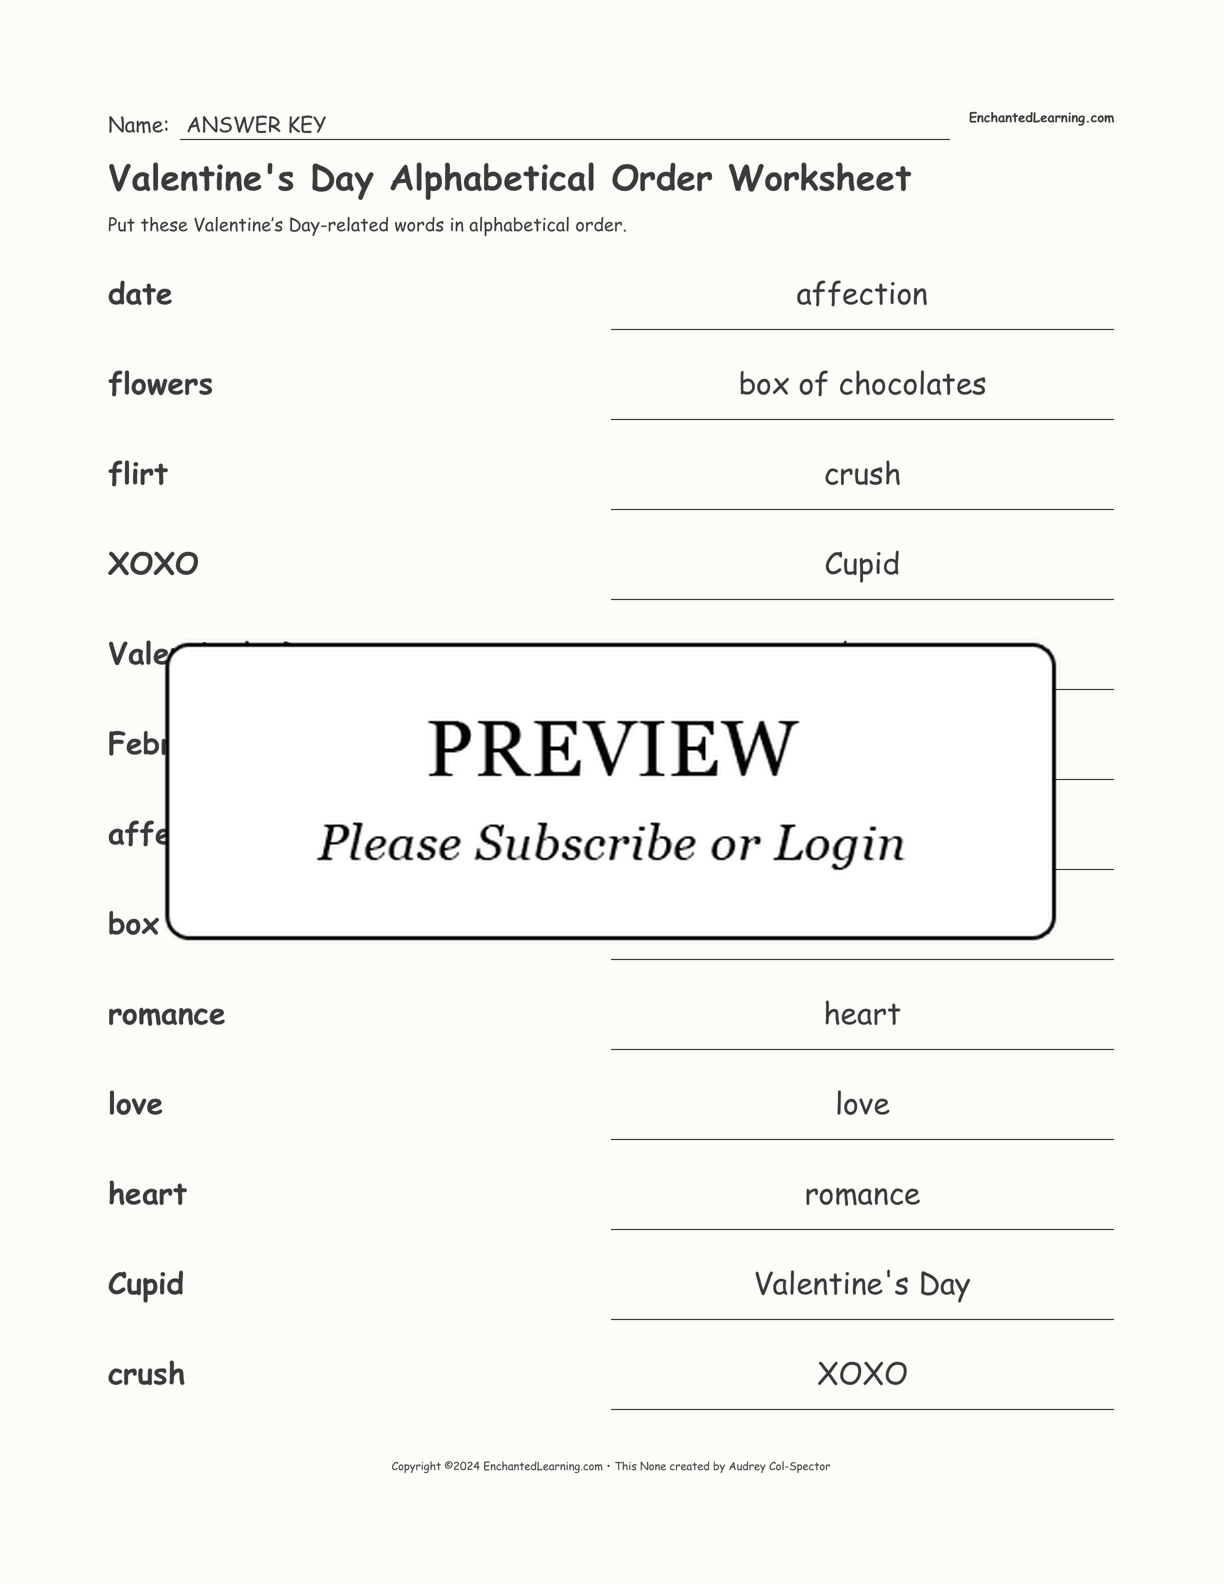 Valentine's Day Alphabetical Order Worksheet interactive worksheet page 2